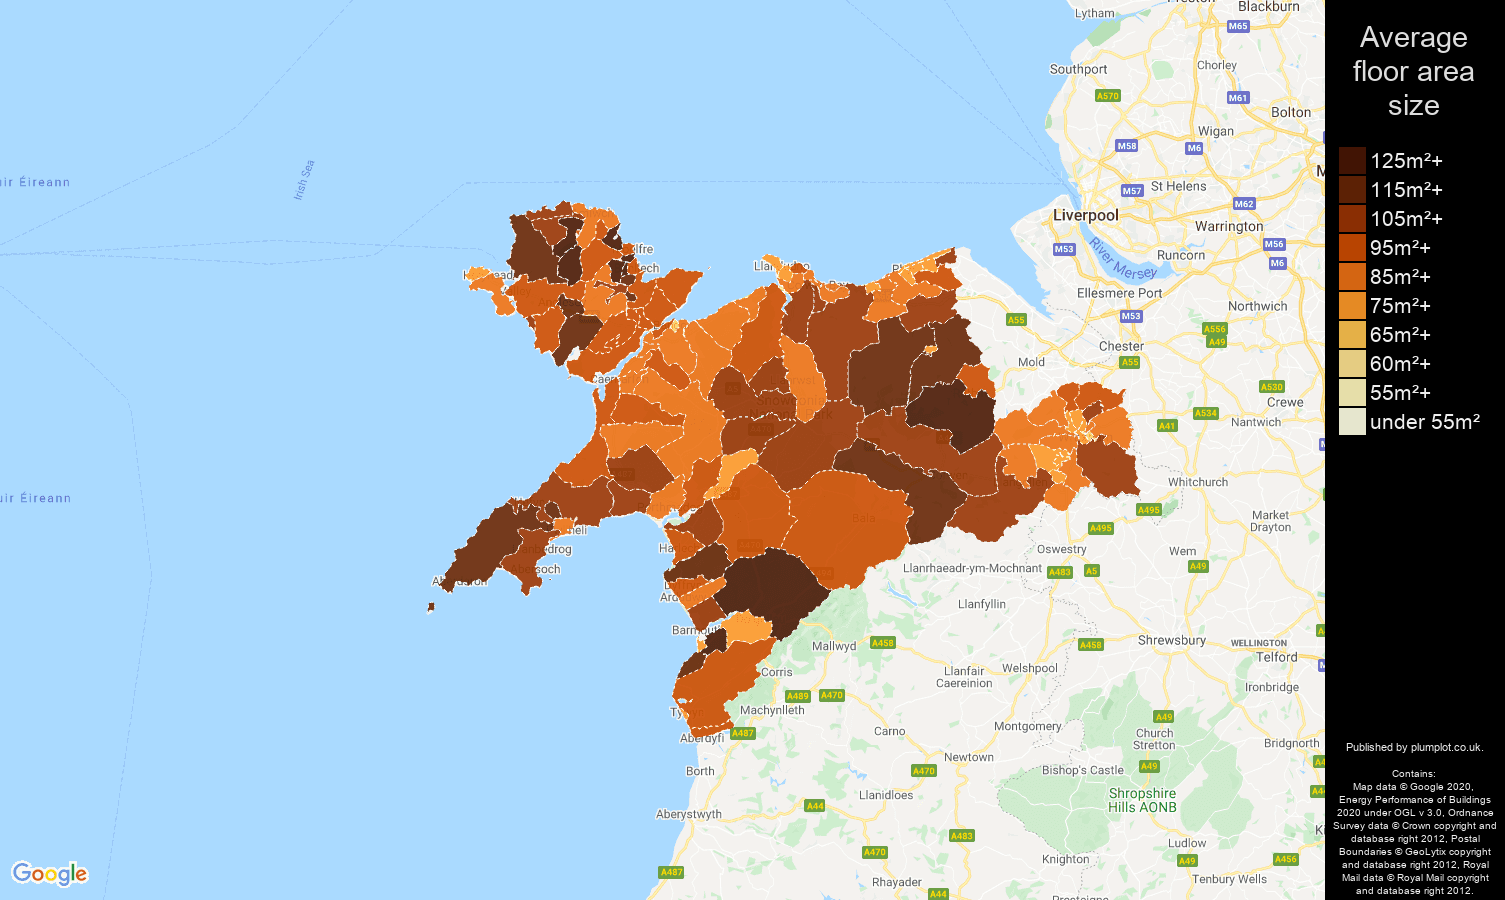 Llandudno map of average floor area size of properties